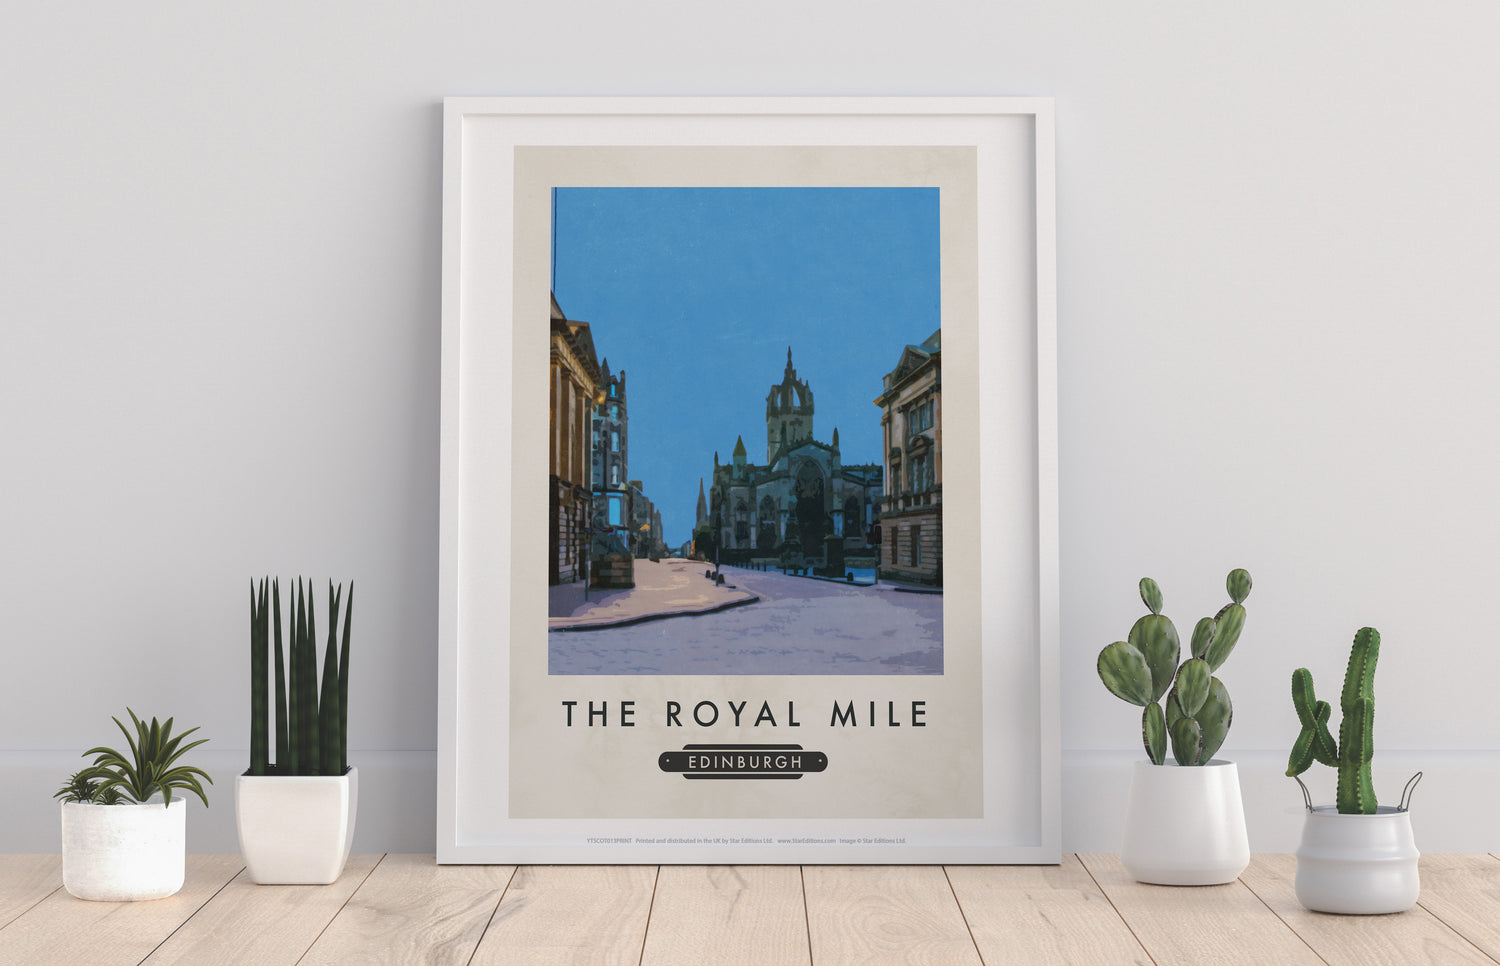 The Royal Mile, Edinburgh, Scotland - Art Print